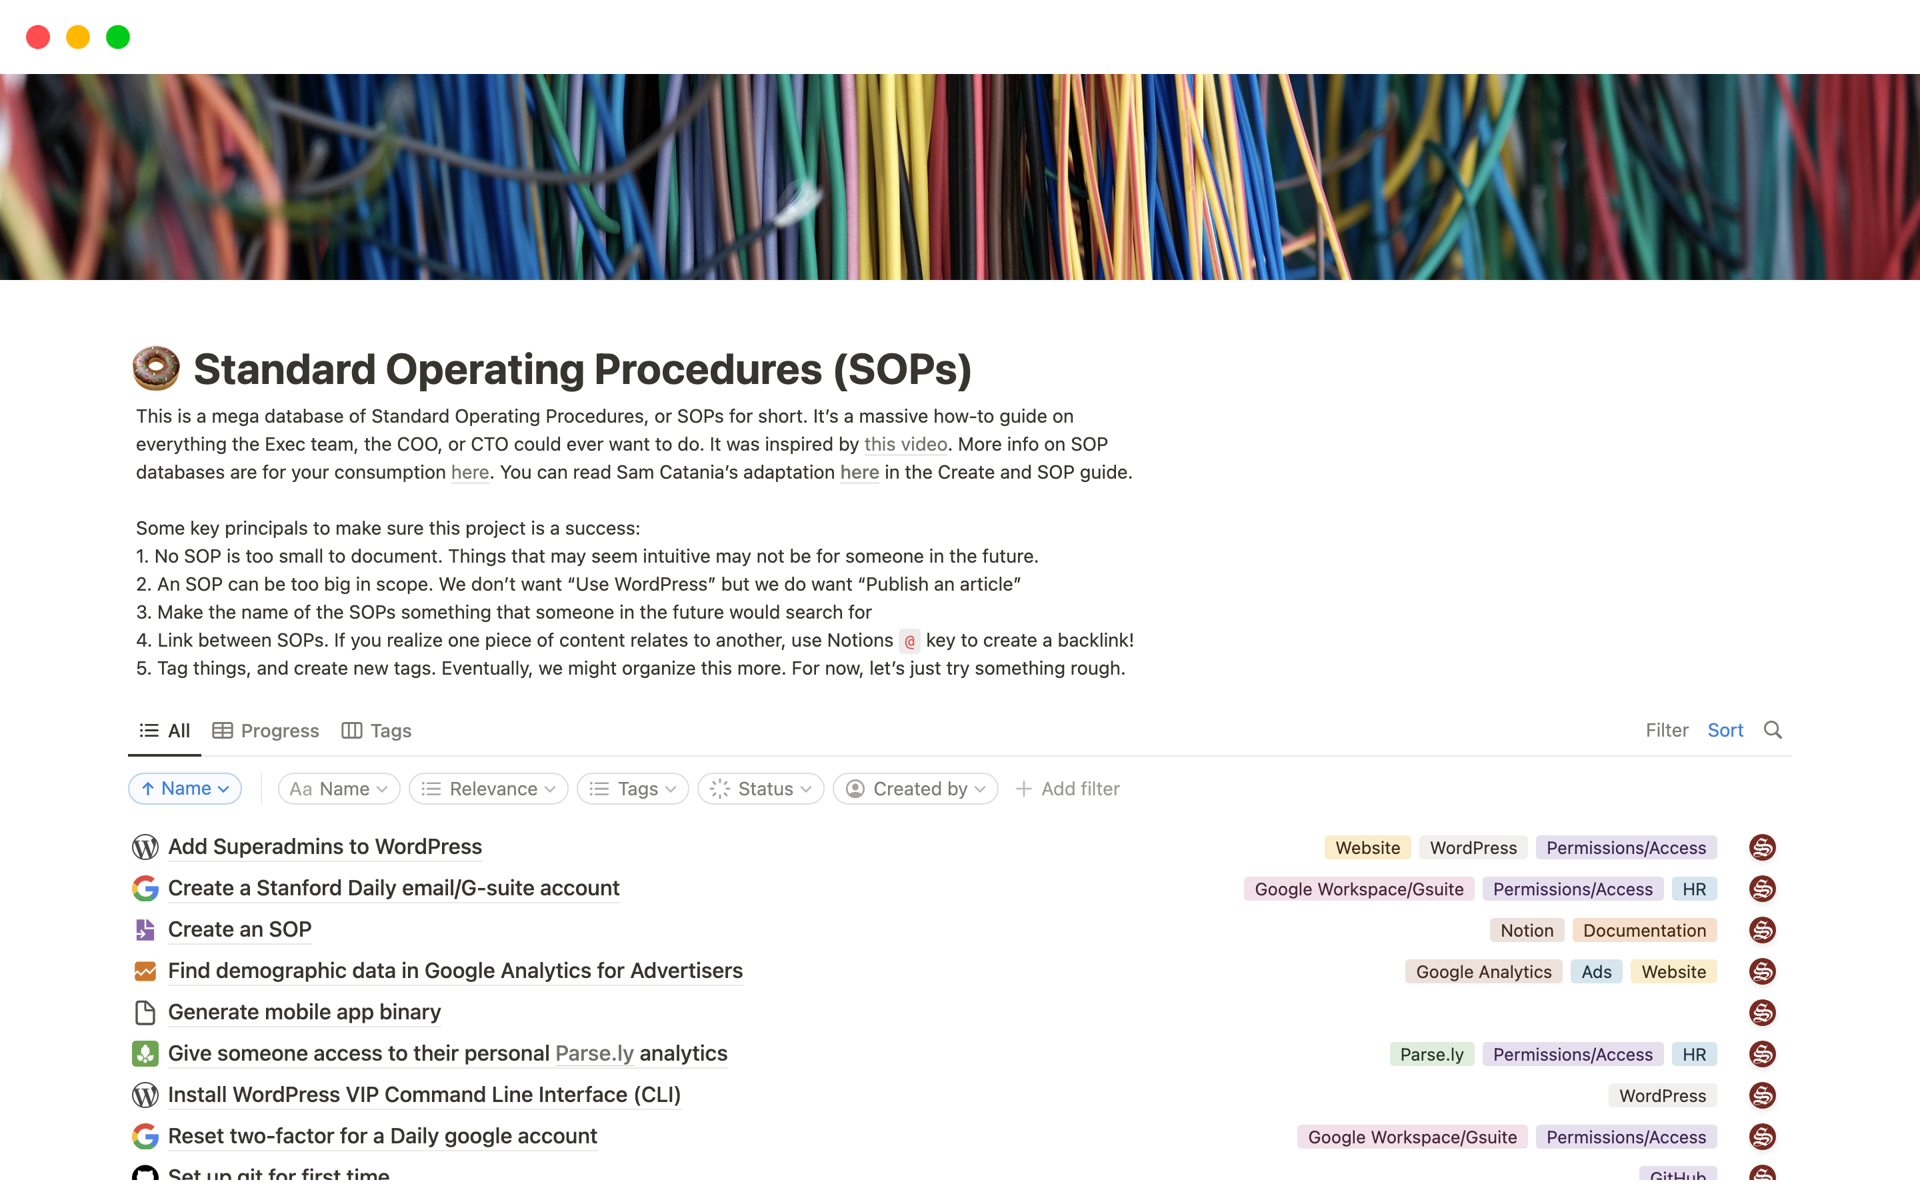 Aperçu du modèle de Standard Operating Procedures (SOPs)